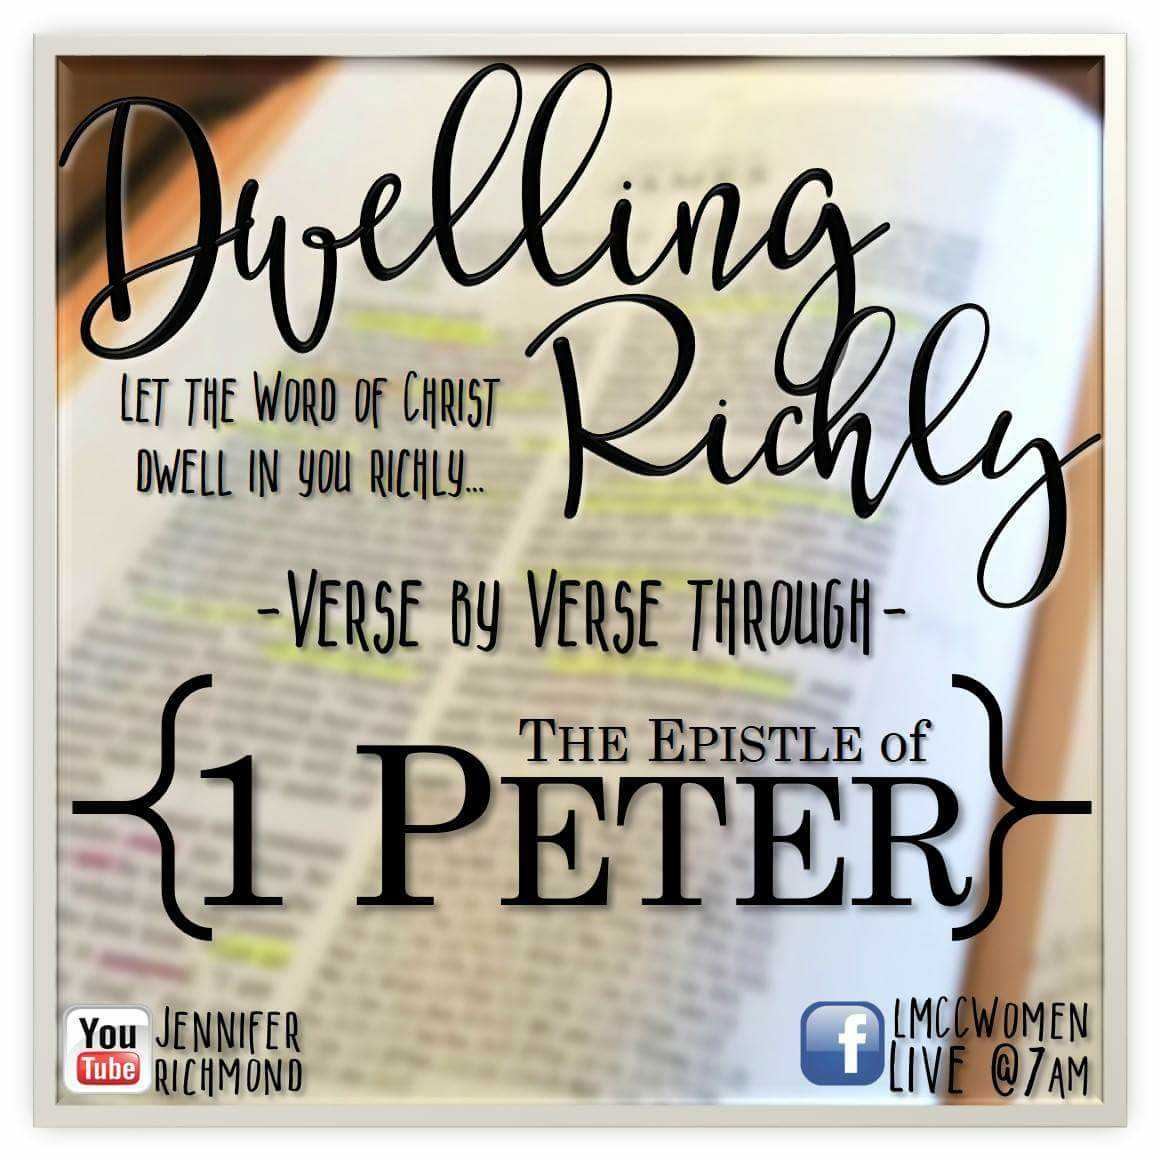 1 Peter 4:1-18